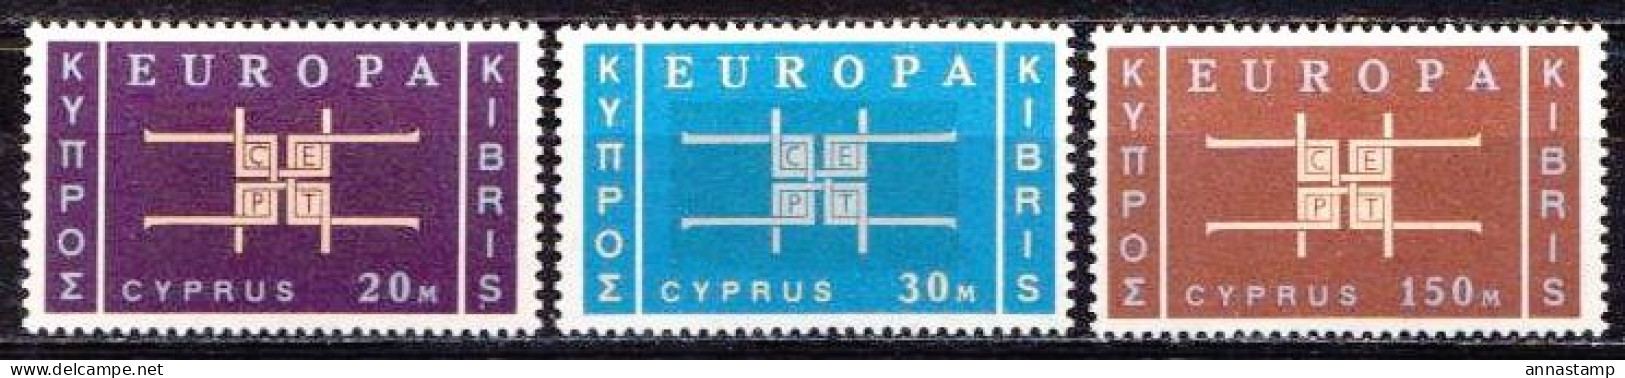 Cyprus MNH Set - 1963